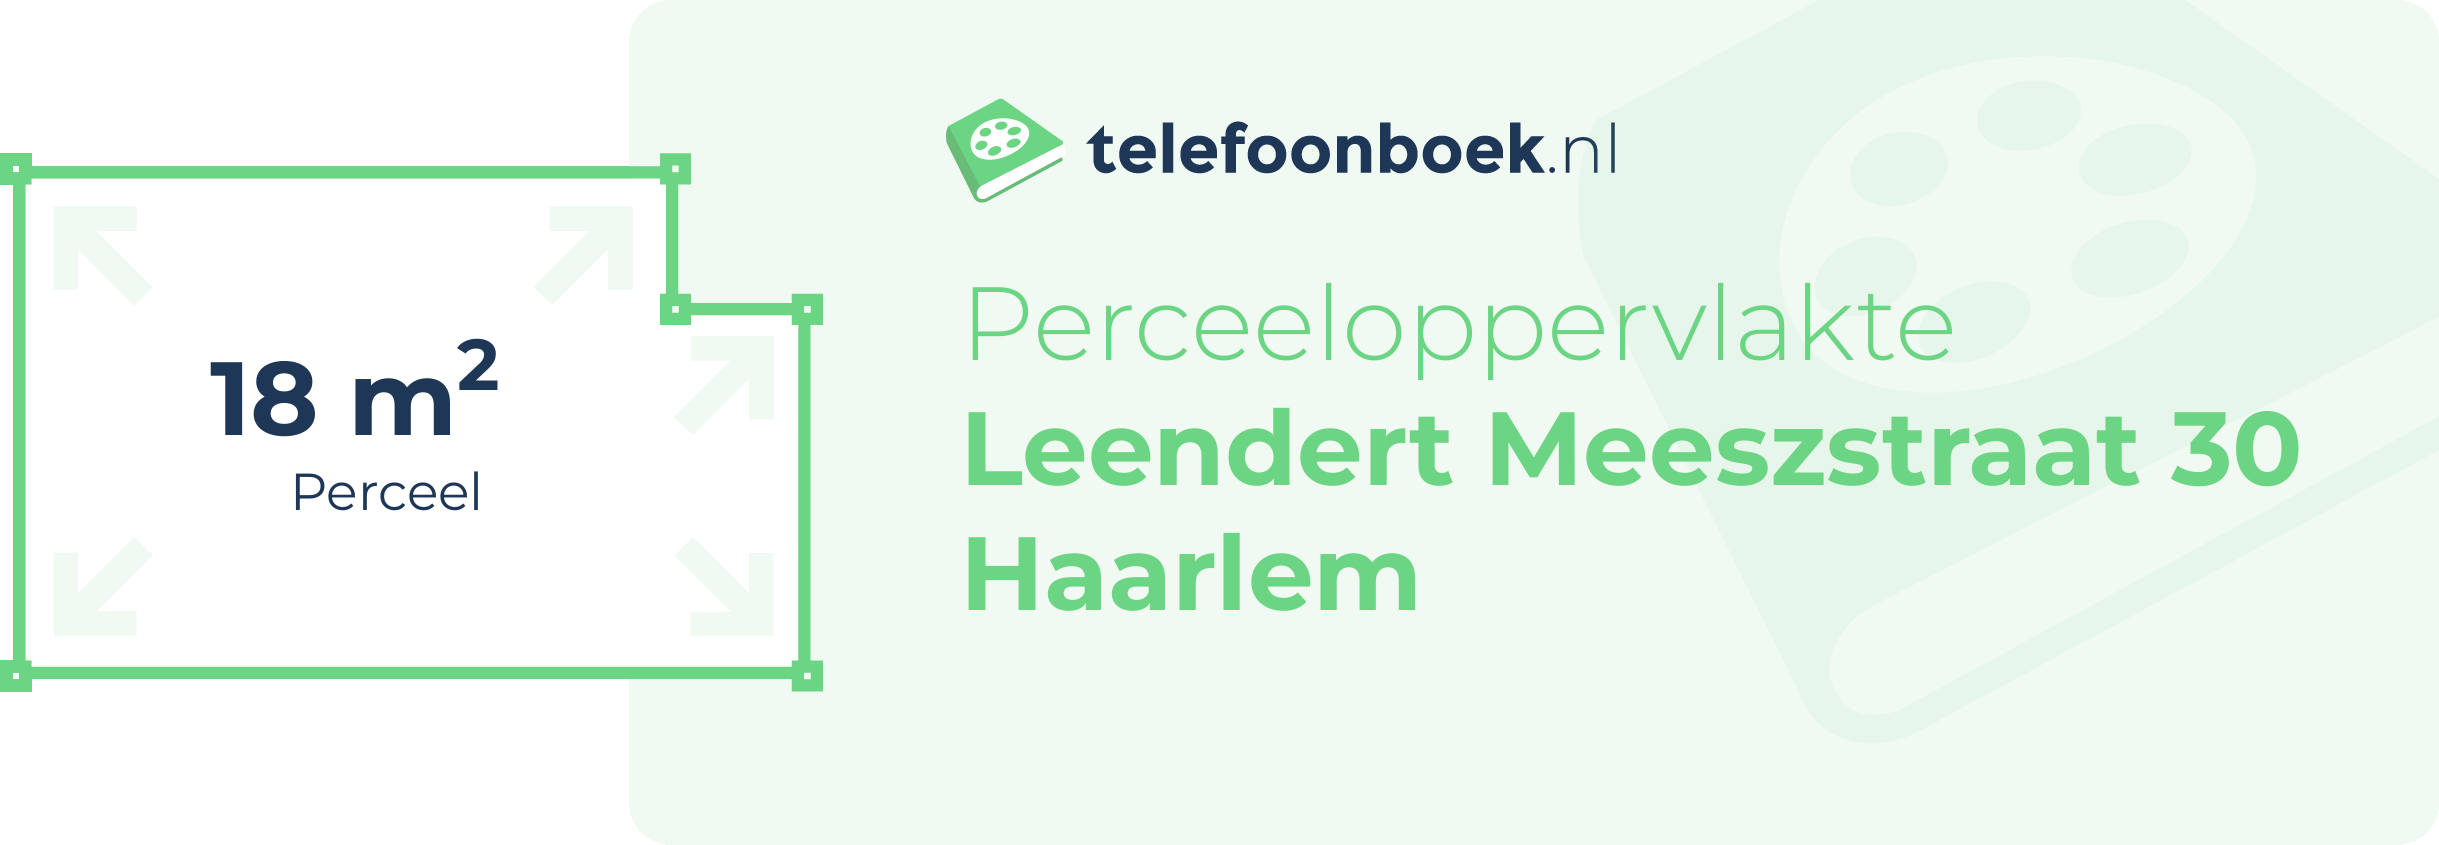 Perceeloppervlakte Leendert Meeszstraat 30 Haarlem